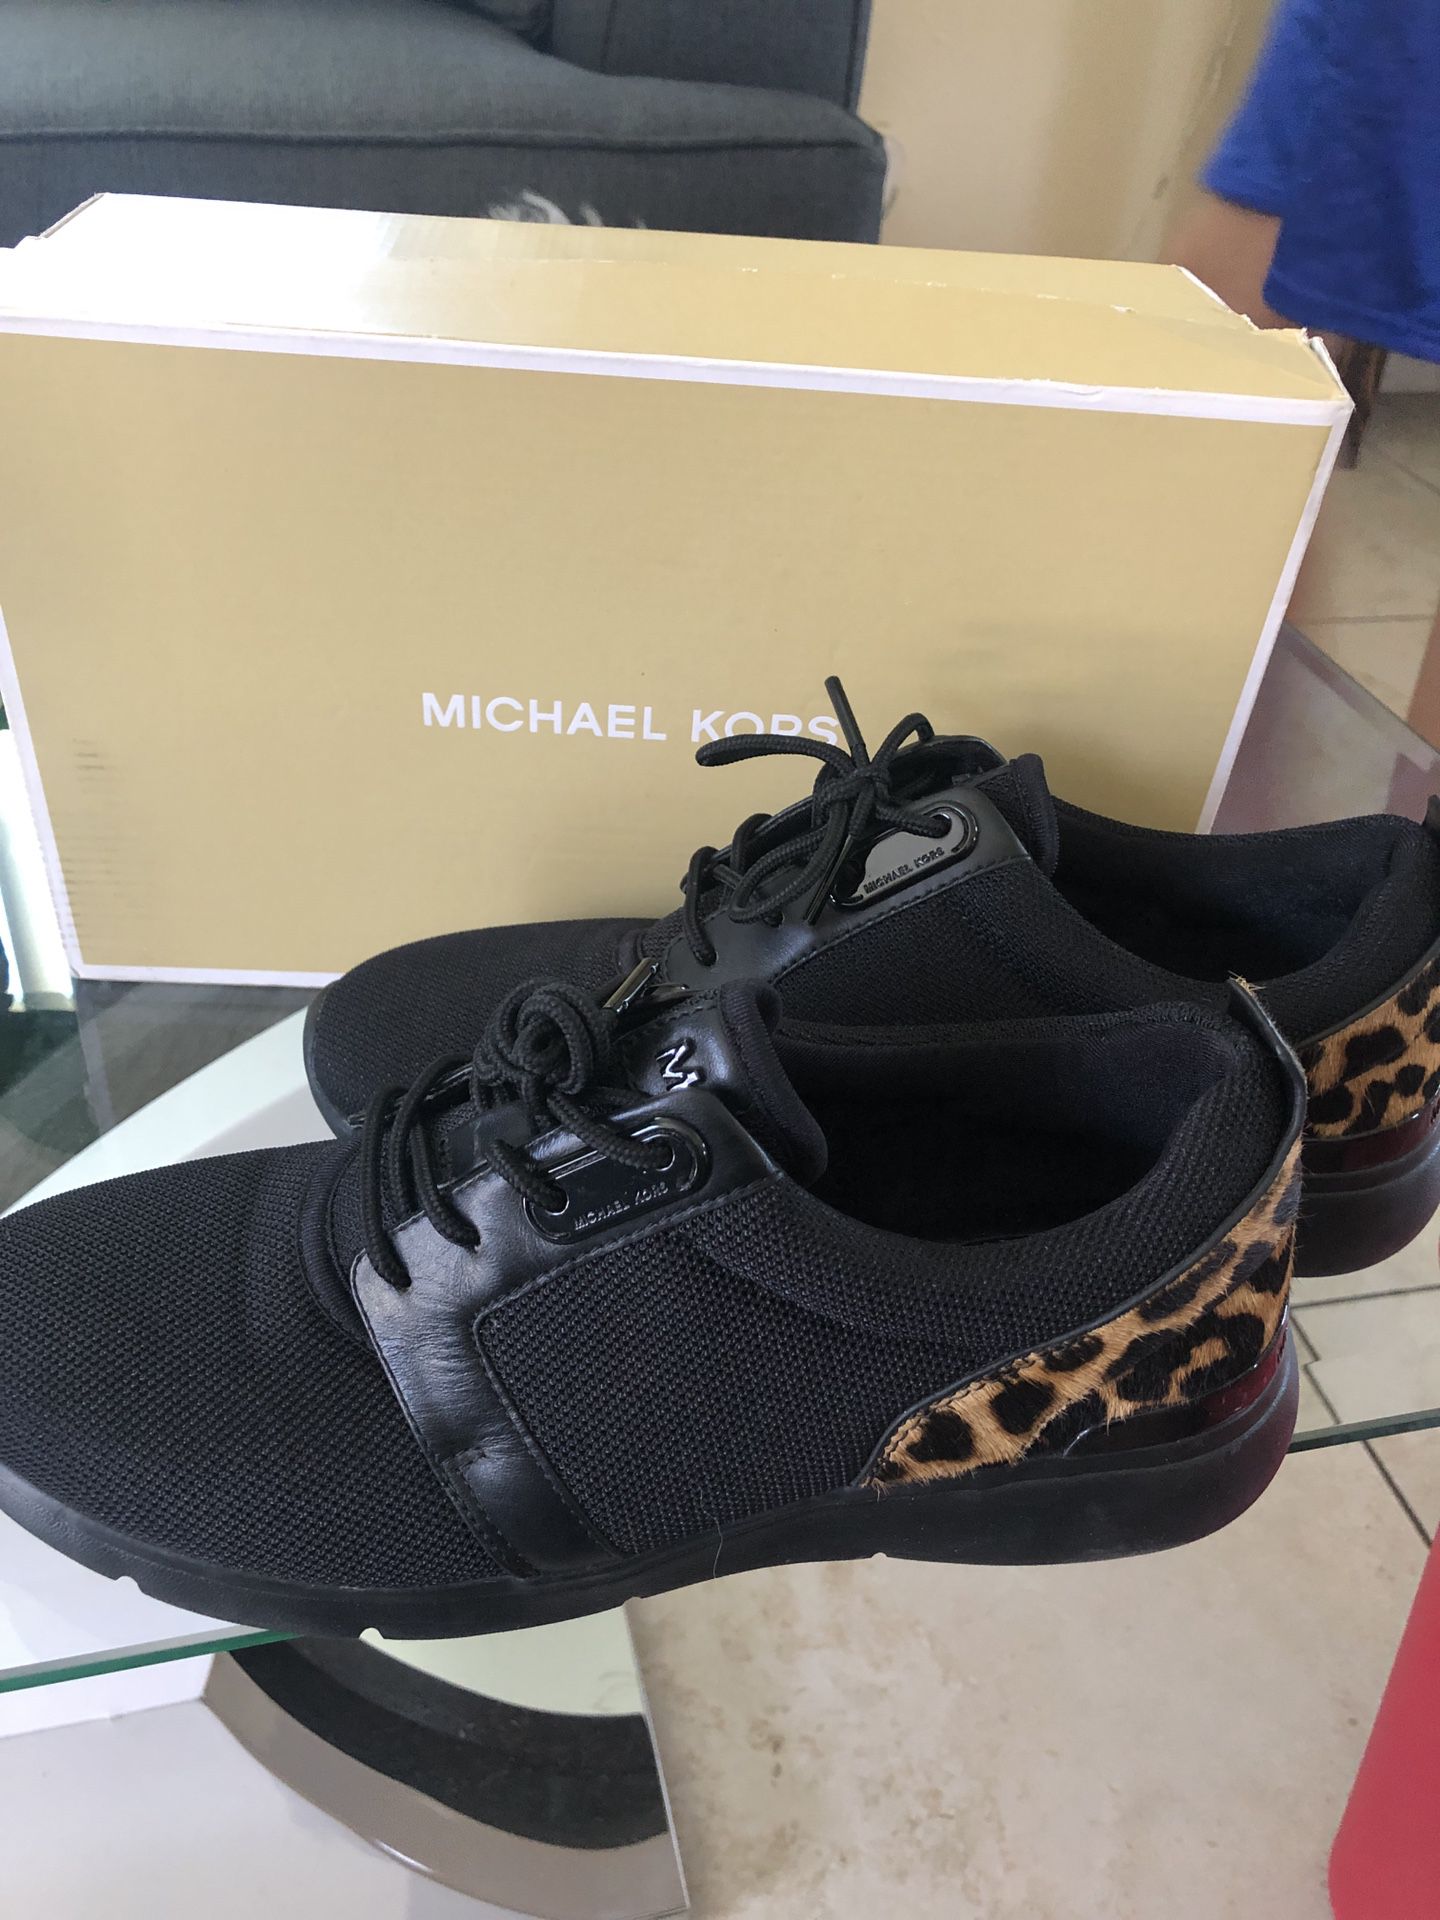 michael kors shoes